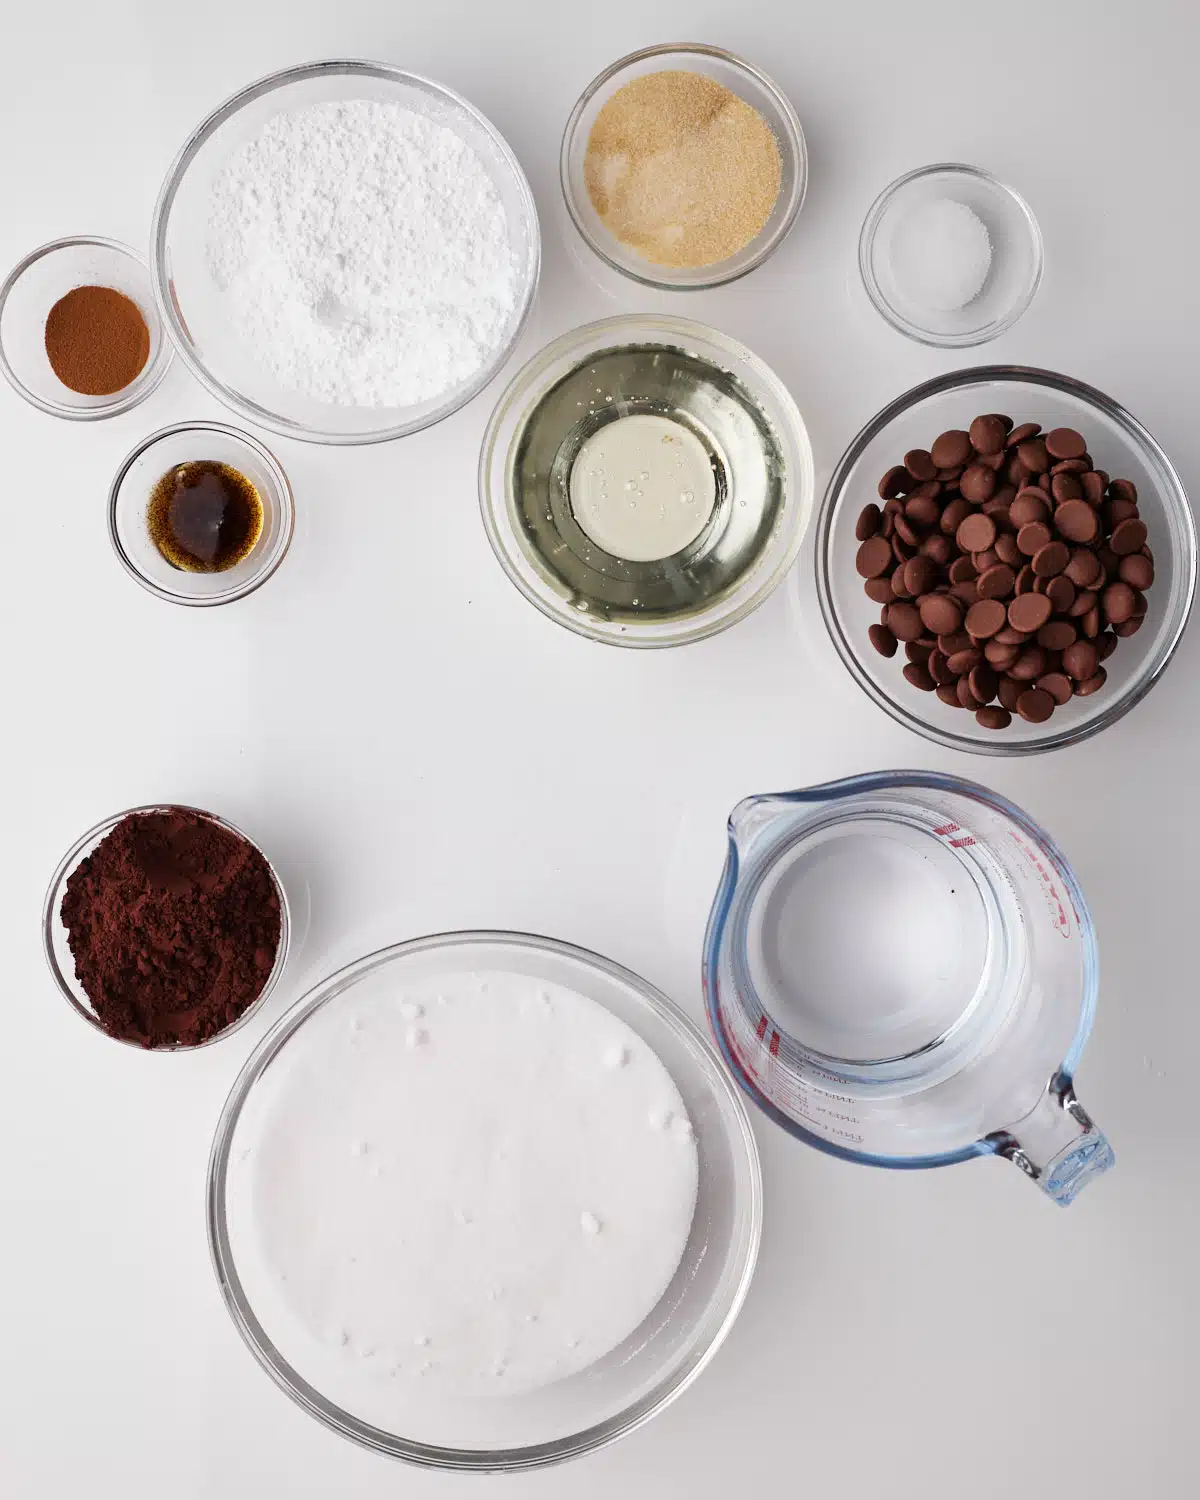 Ingredients to make chocolate marshmallow - sugar, corn syrup, cocoa powder, gelatine powder, water, espresso powder, powdered sugar and chocolate. 